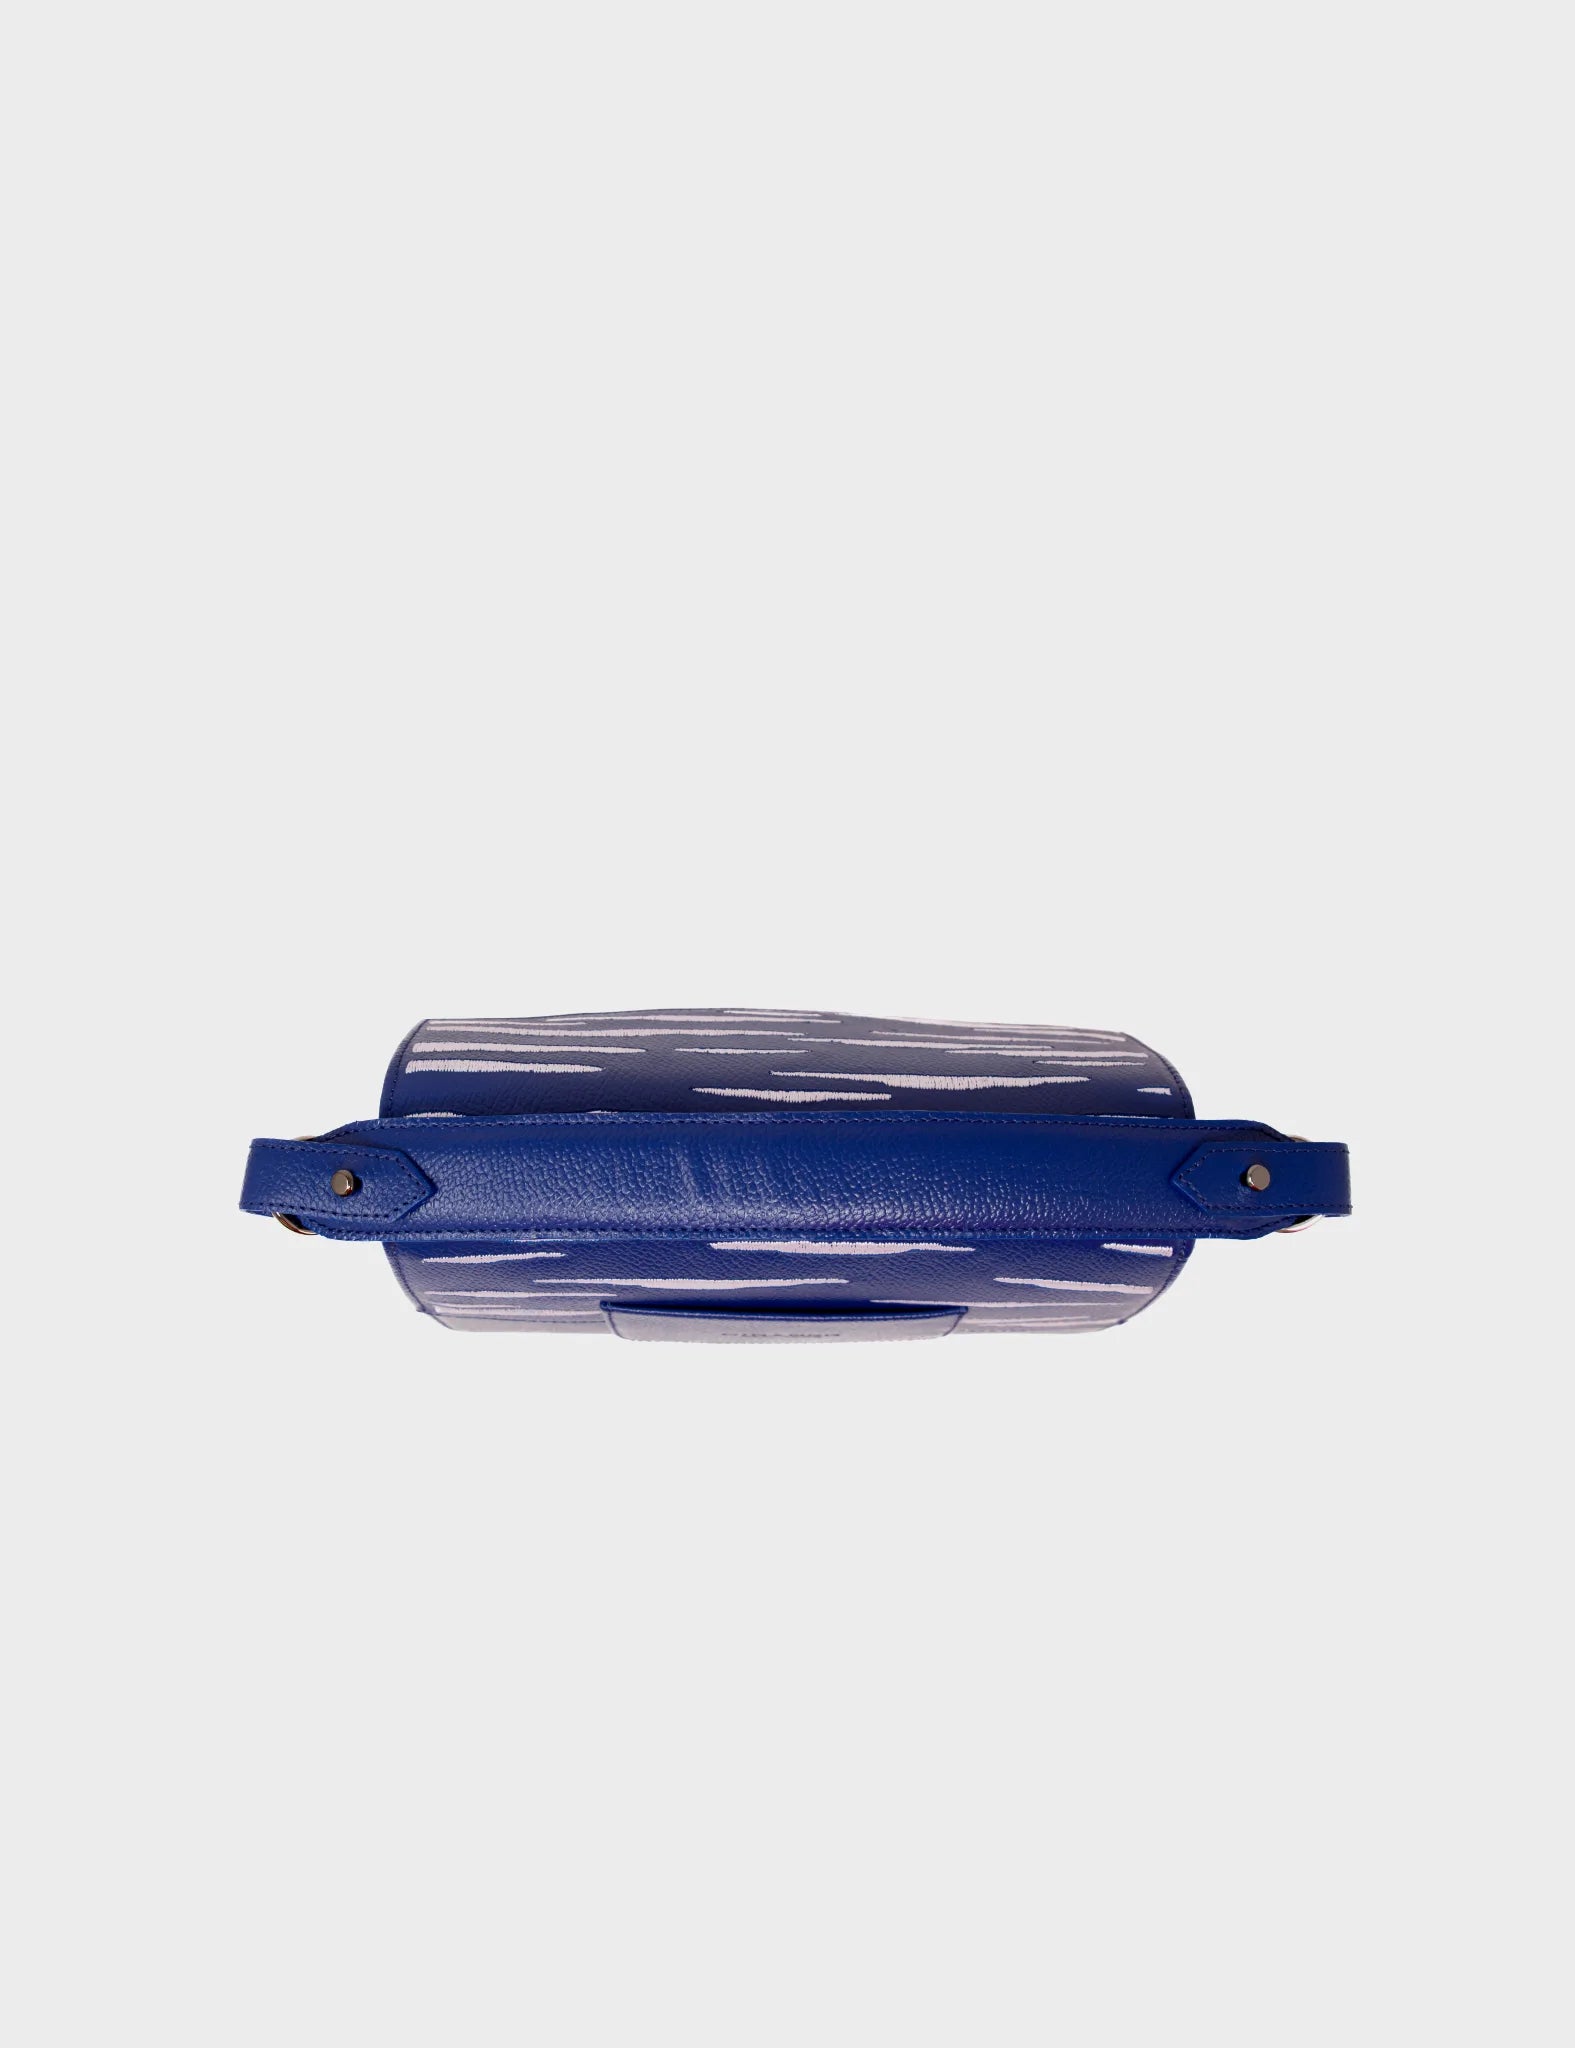 Mini Crossbody Handbag Royal Blue Leather - Clouds Embroidery - Top